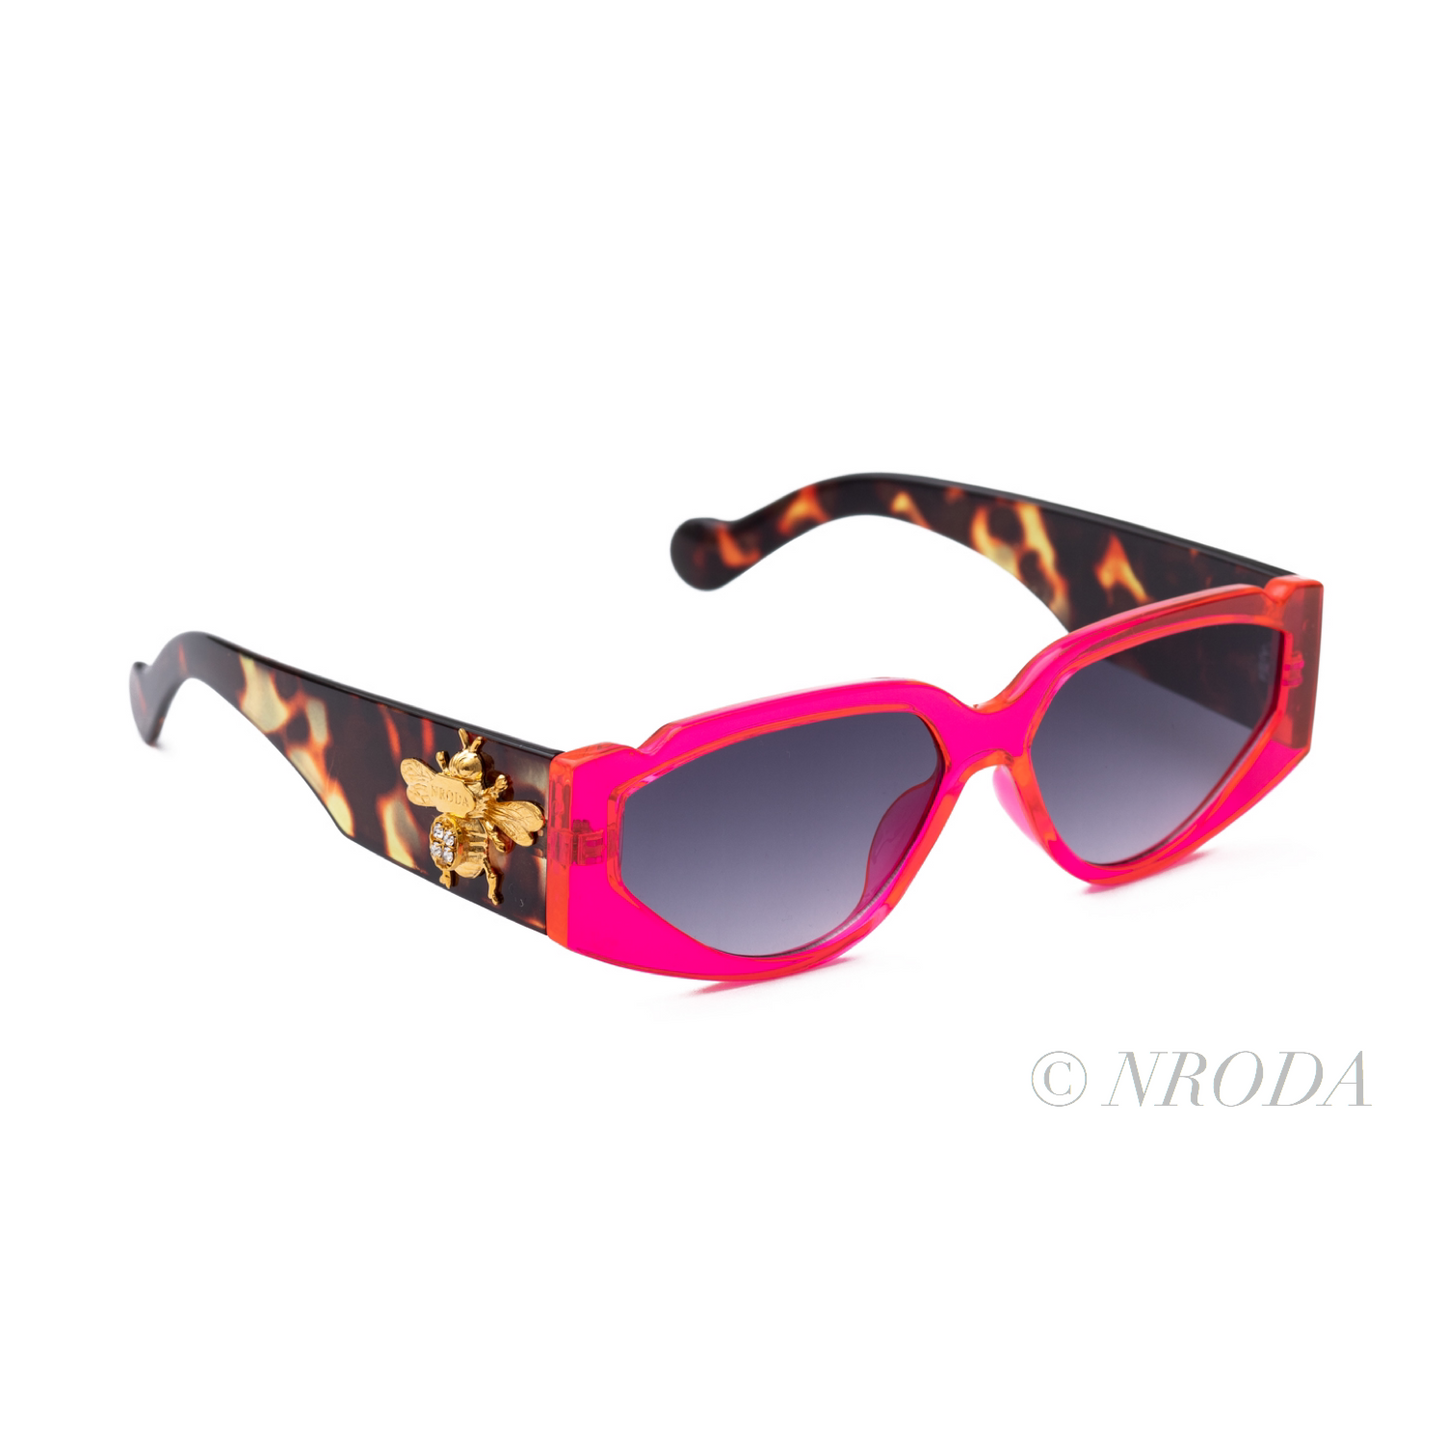 Nroda Gianni Love Bee - Gemstone edition Fire Rose Eyewear Sunglasses Collection, Tnemnroda man- NRODA